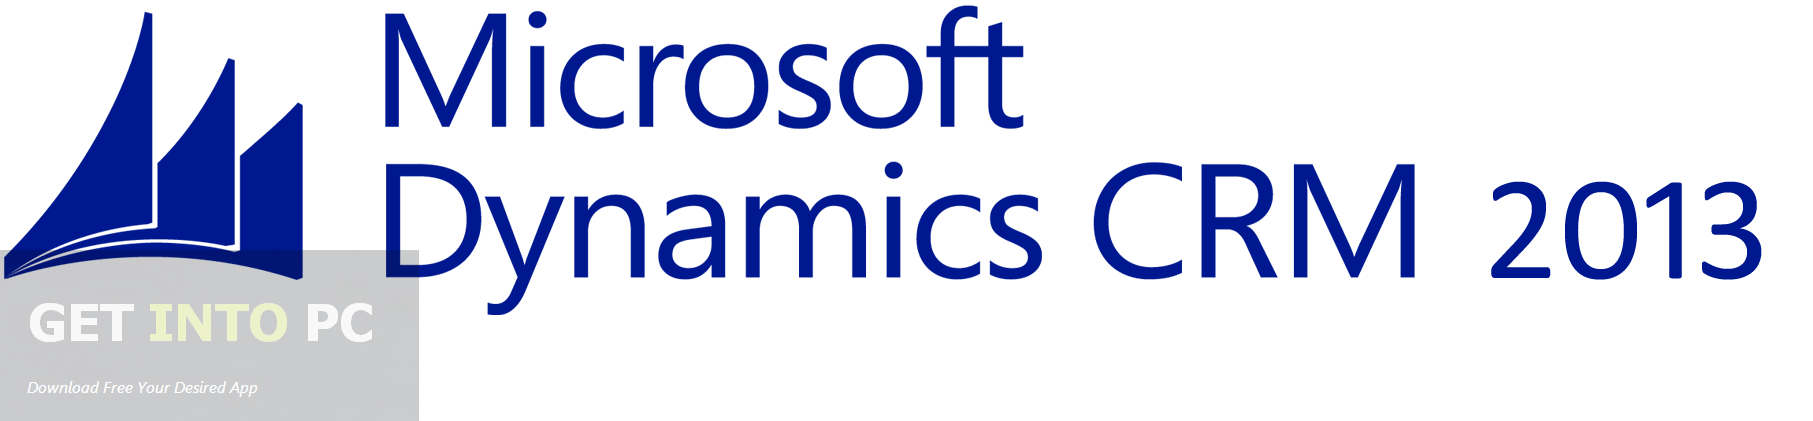 Dynamics CRM 2013 Logo - Microsoft Dynamics CRM Server 2013 Free Download